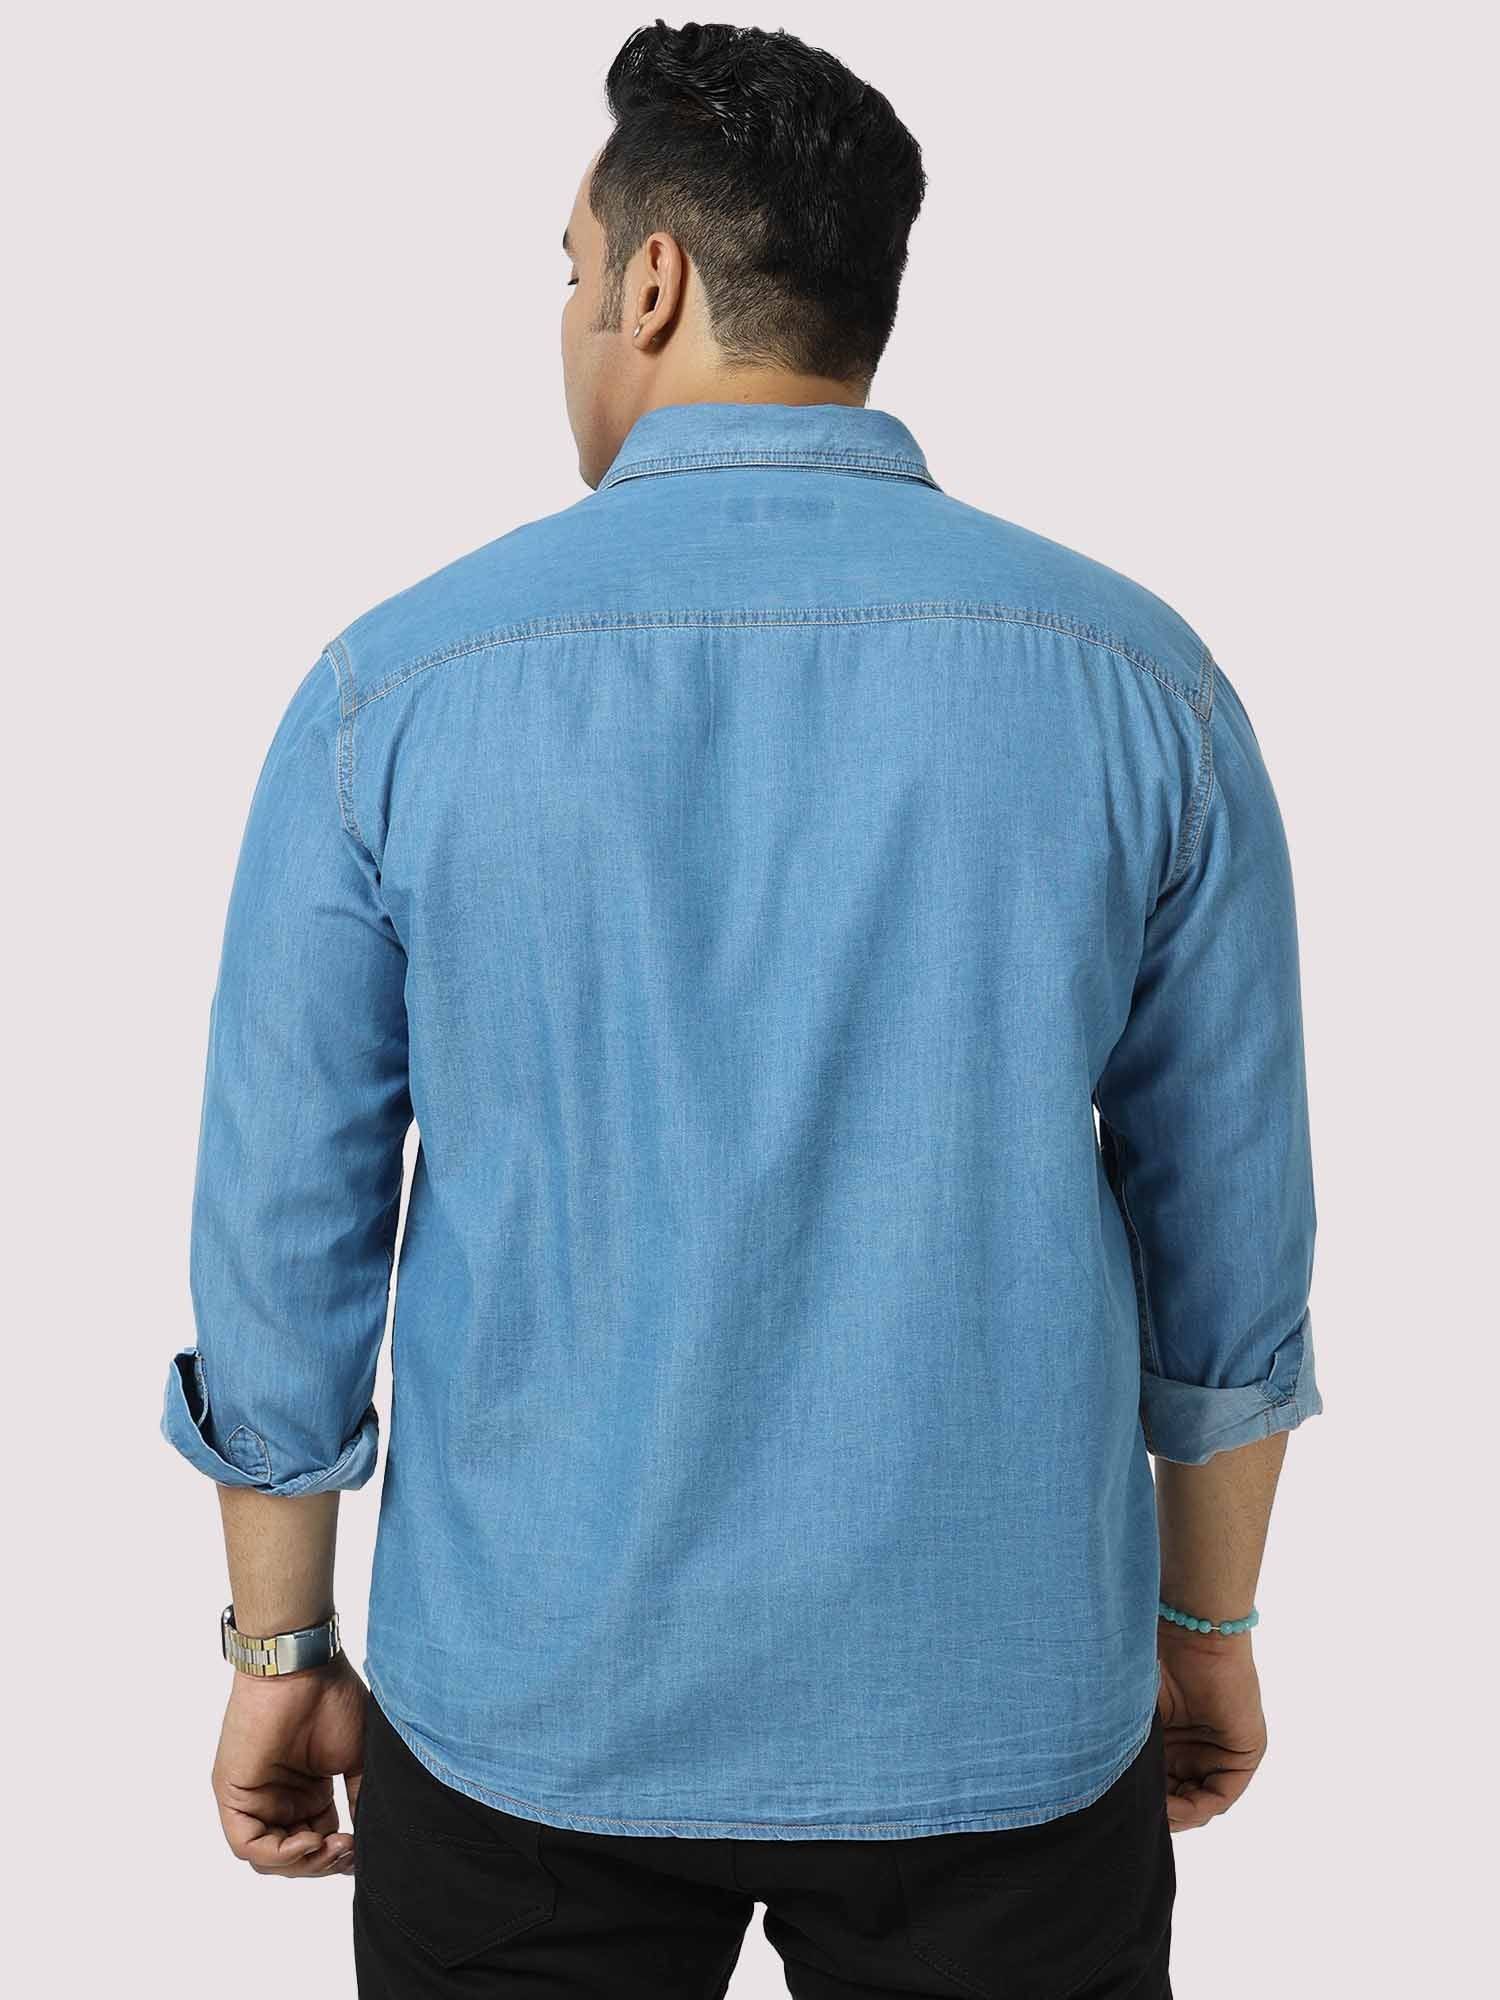 Blue Denim Double Pocket Full Sleeve Shirt Men's Plus Size - Guniaa Fashions